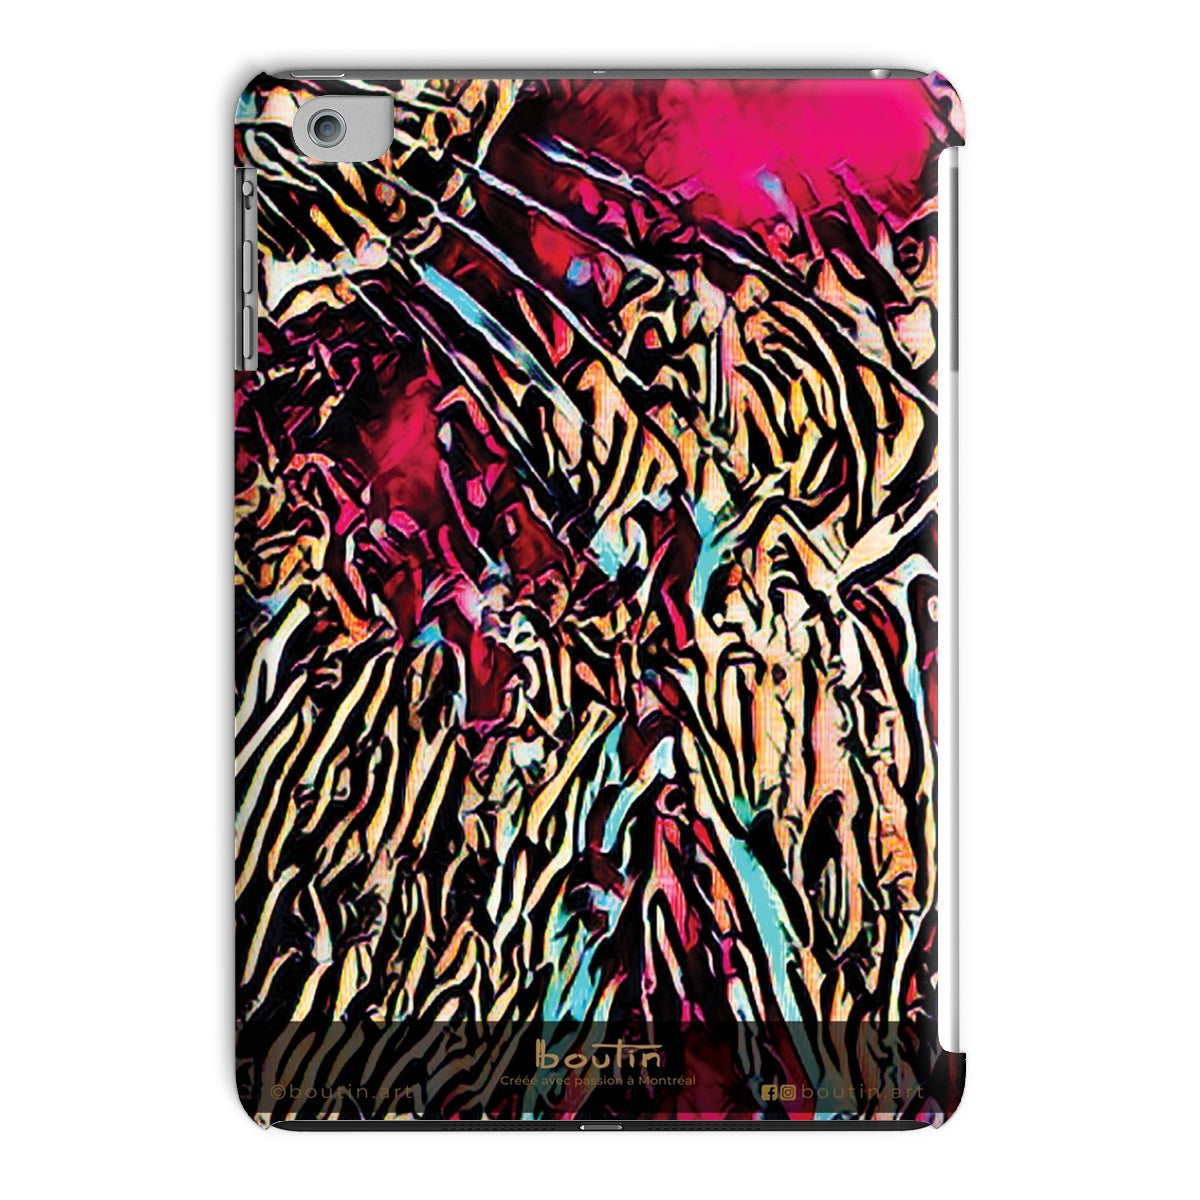 Arthur burgundy iPad case